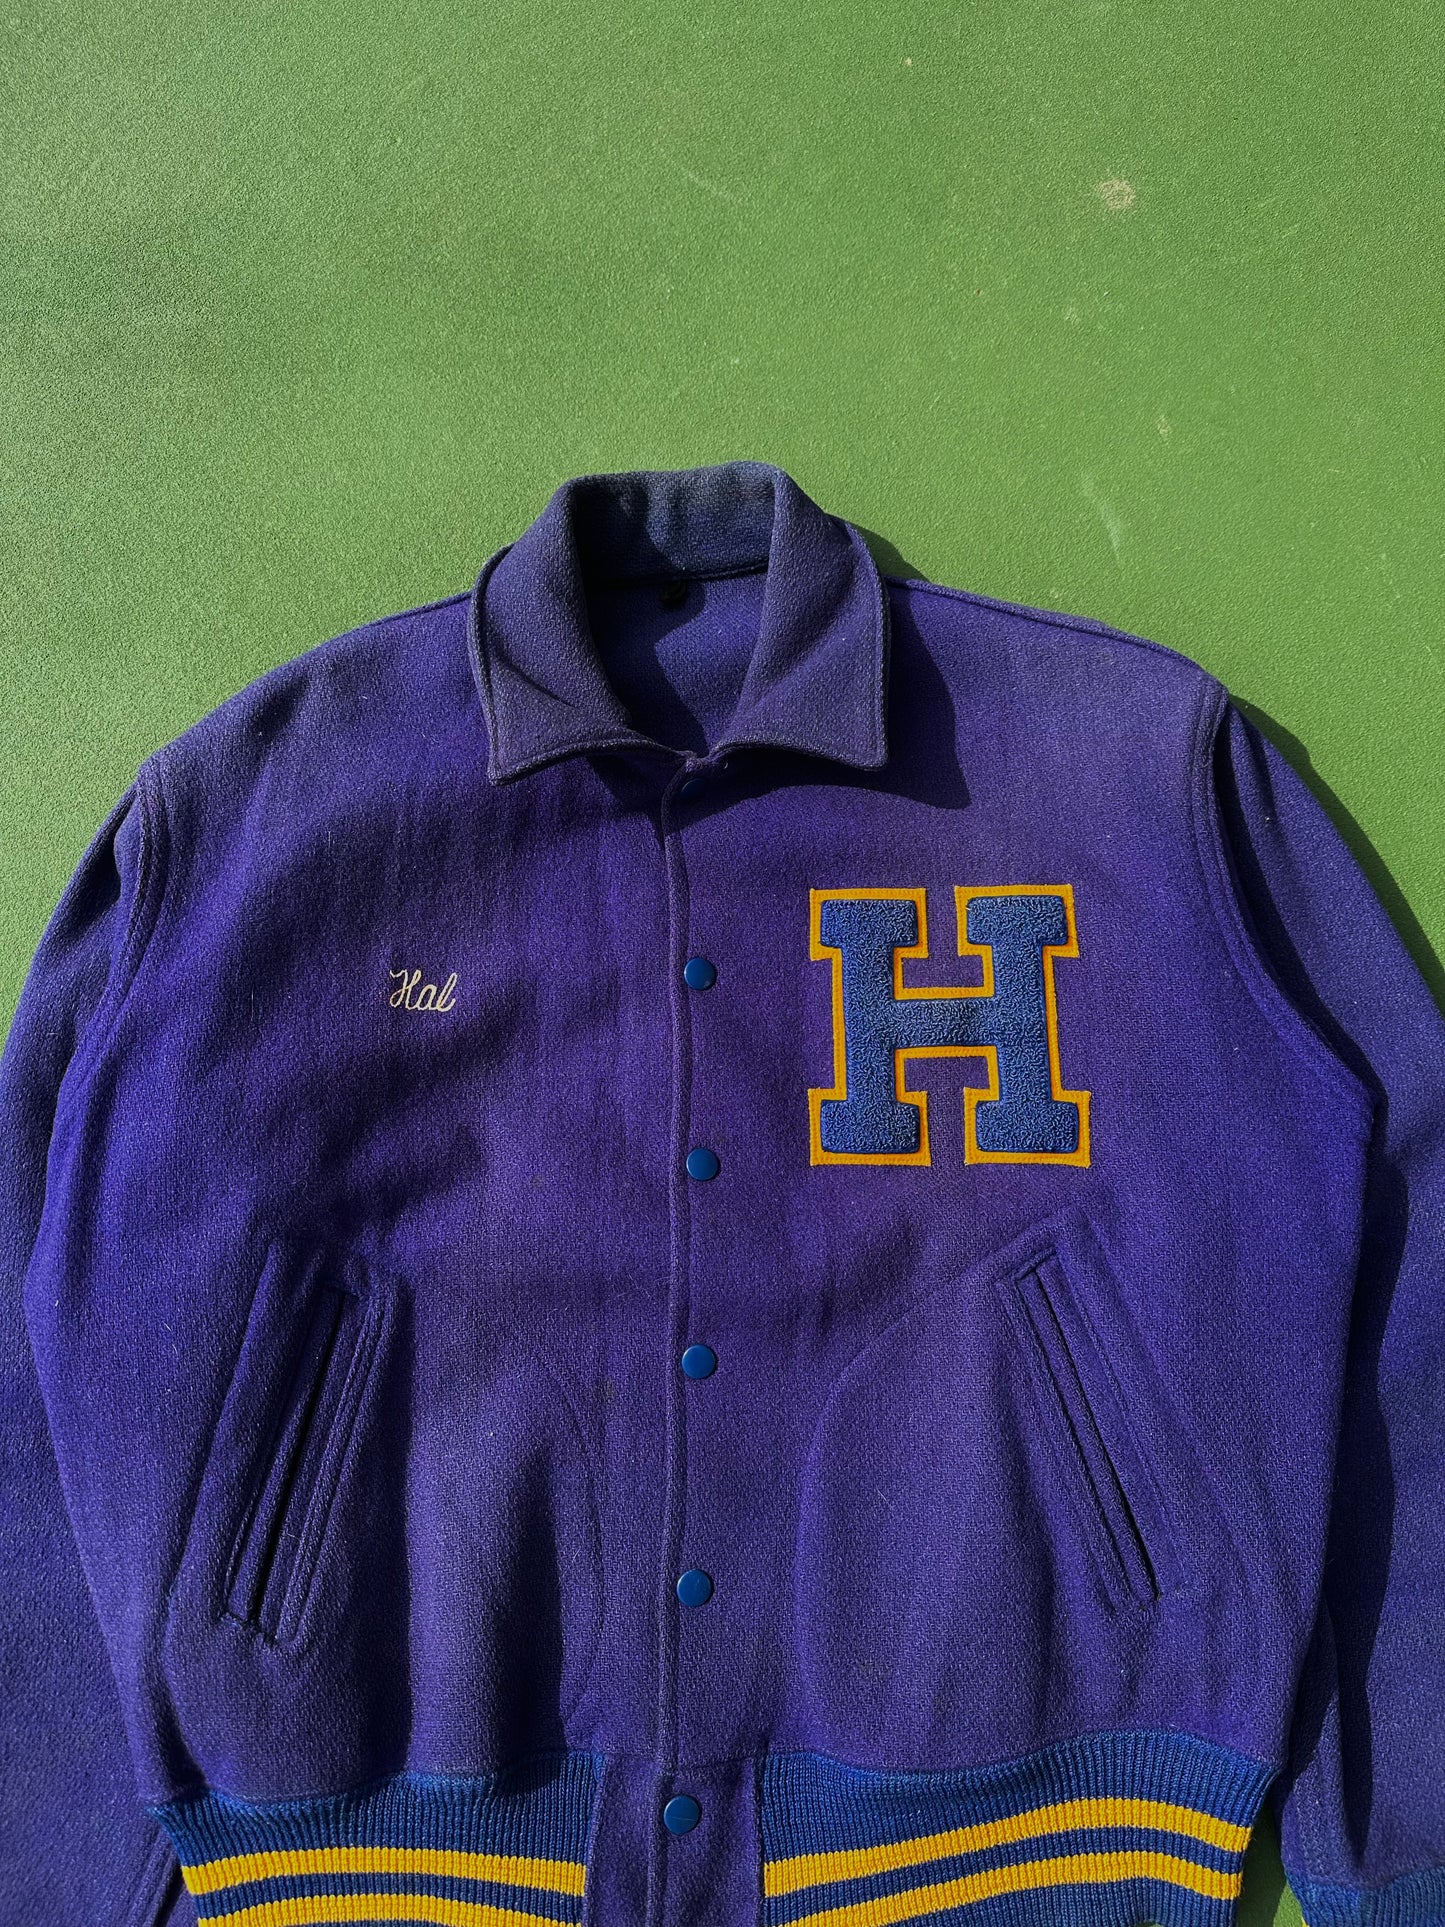 Vintage 80s Varsity Jacket